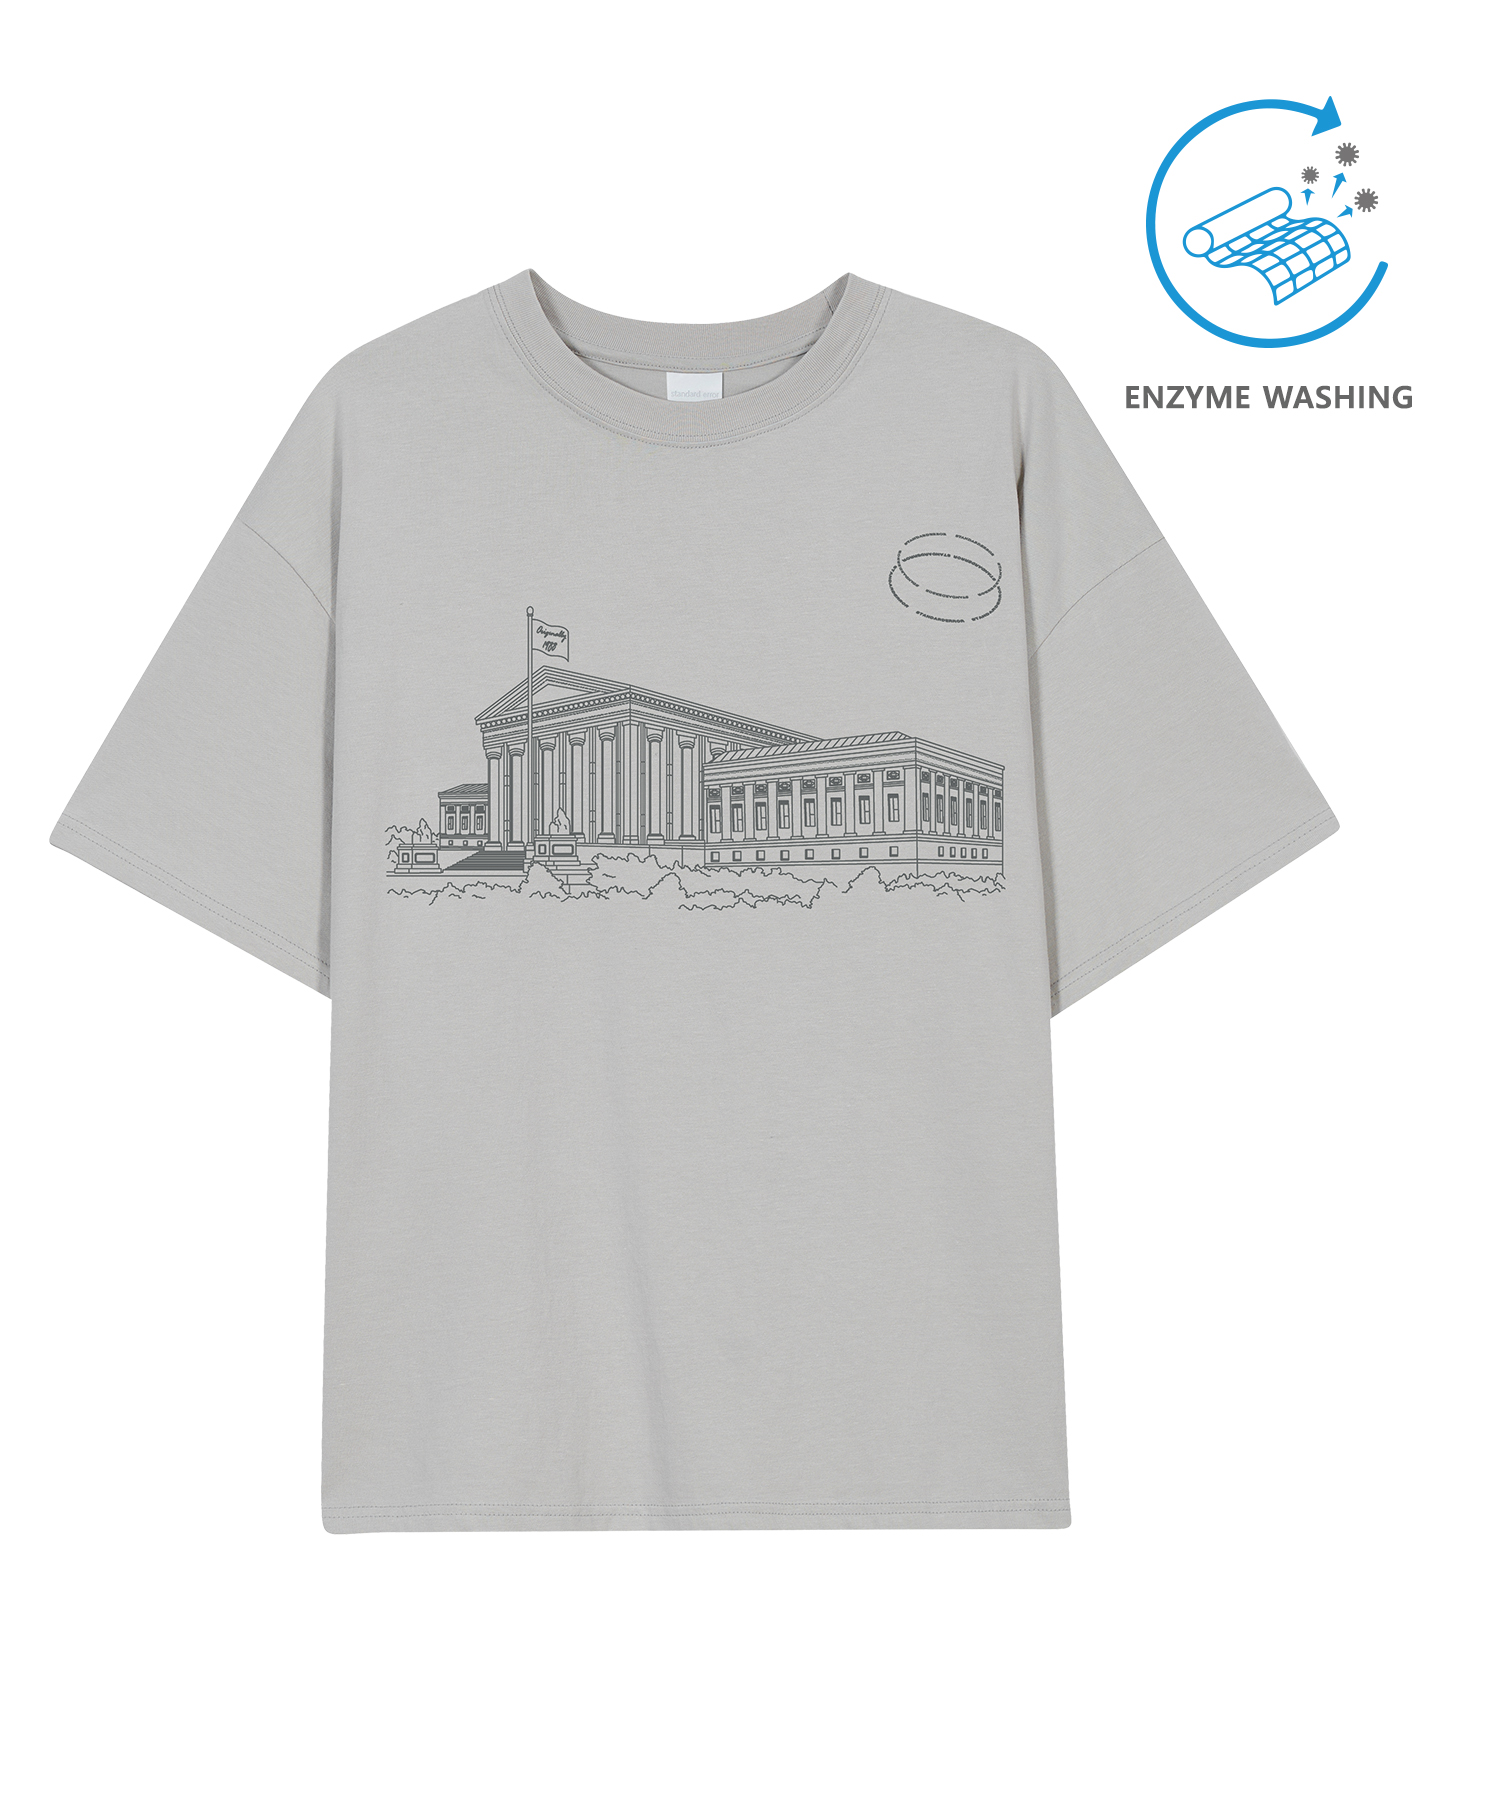 IRT168 [Compact YAN] Enzaim Washing Drawing College Short-sleeved T-shirt Khaki Gray